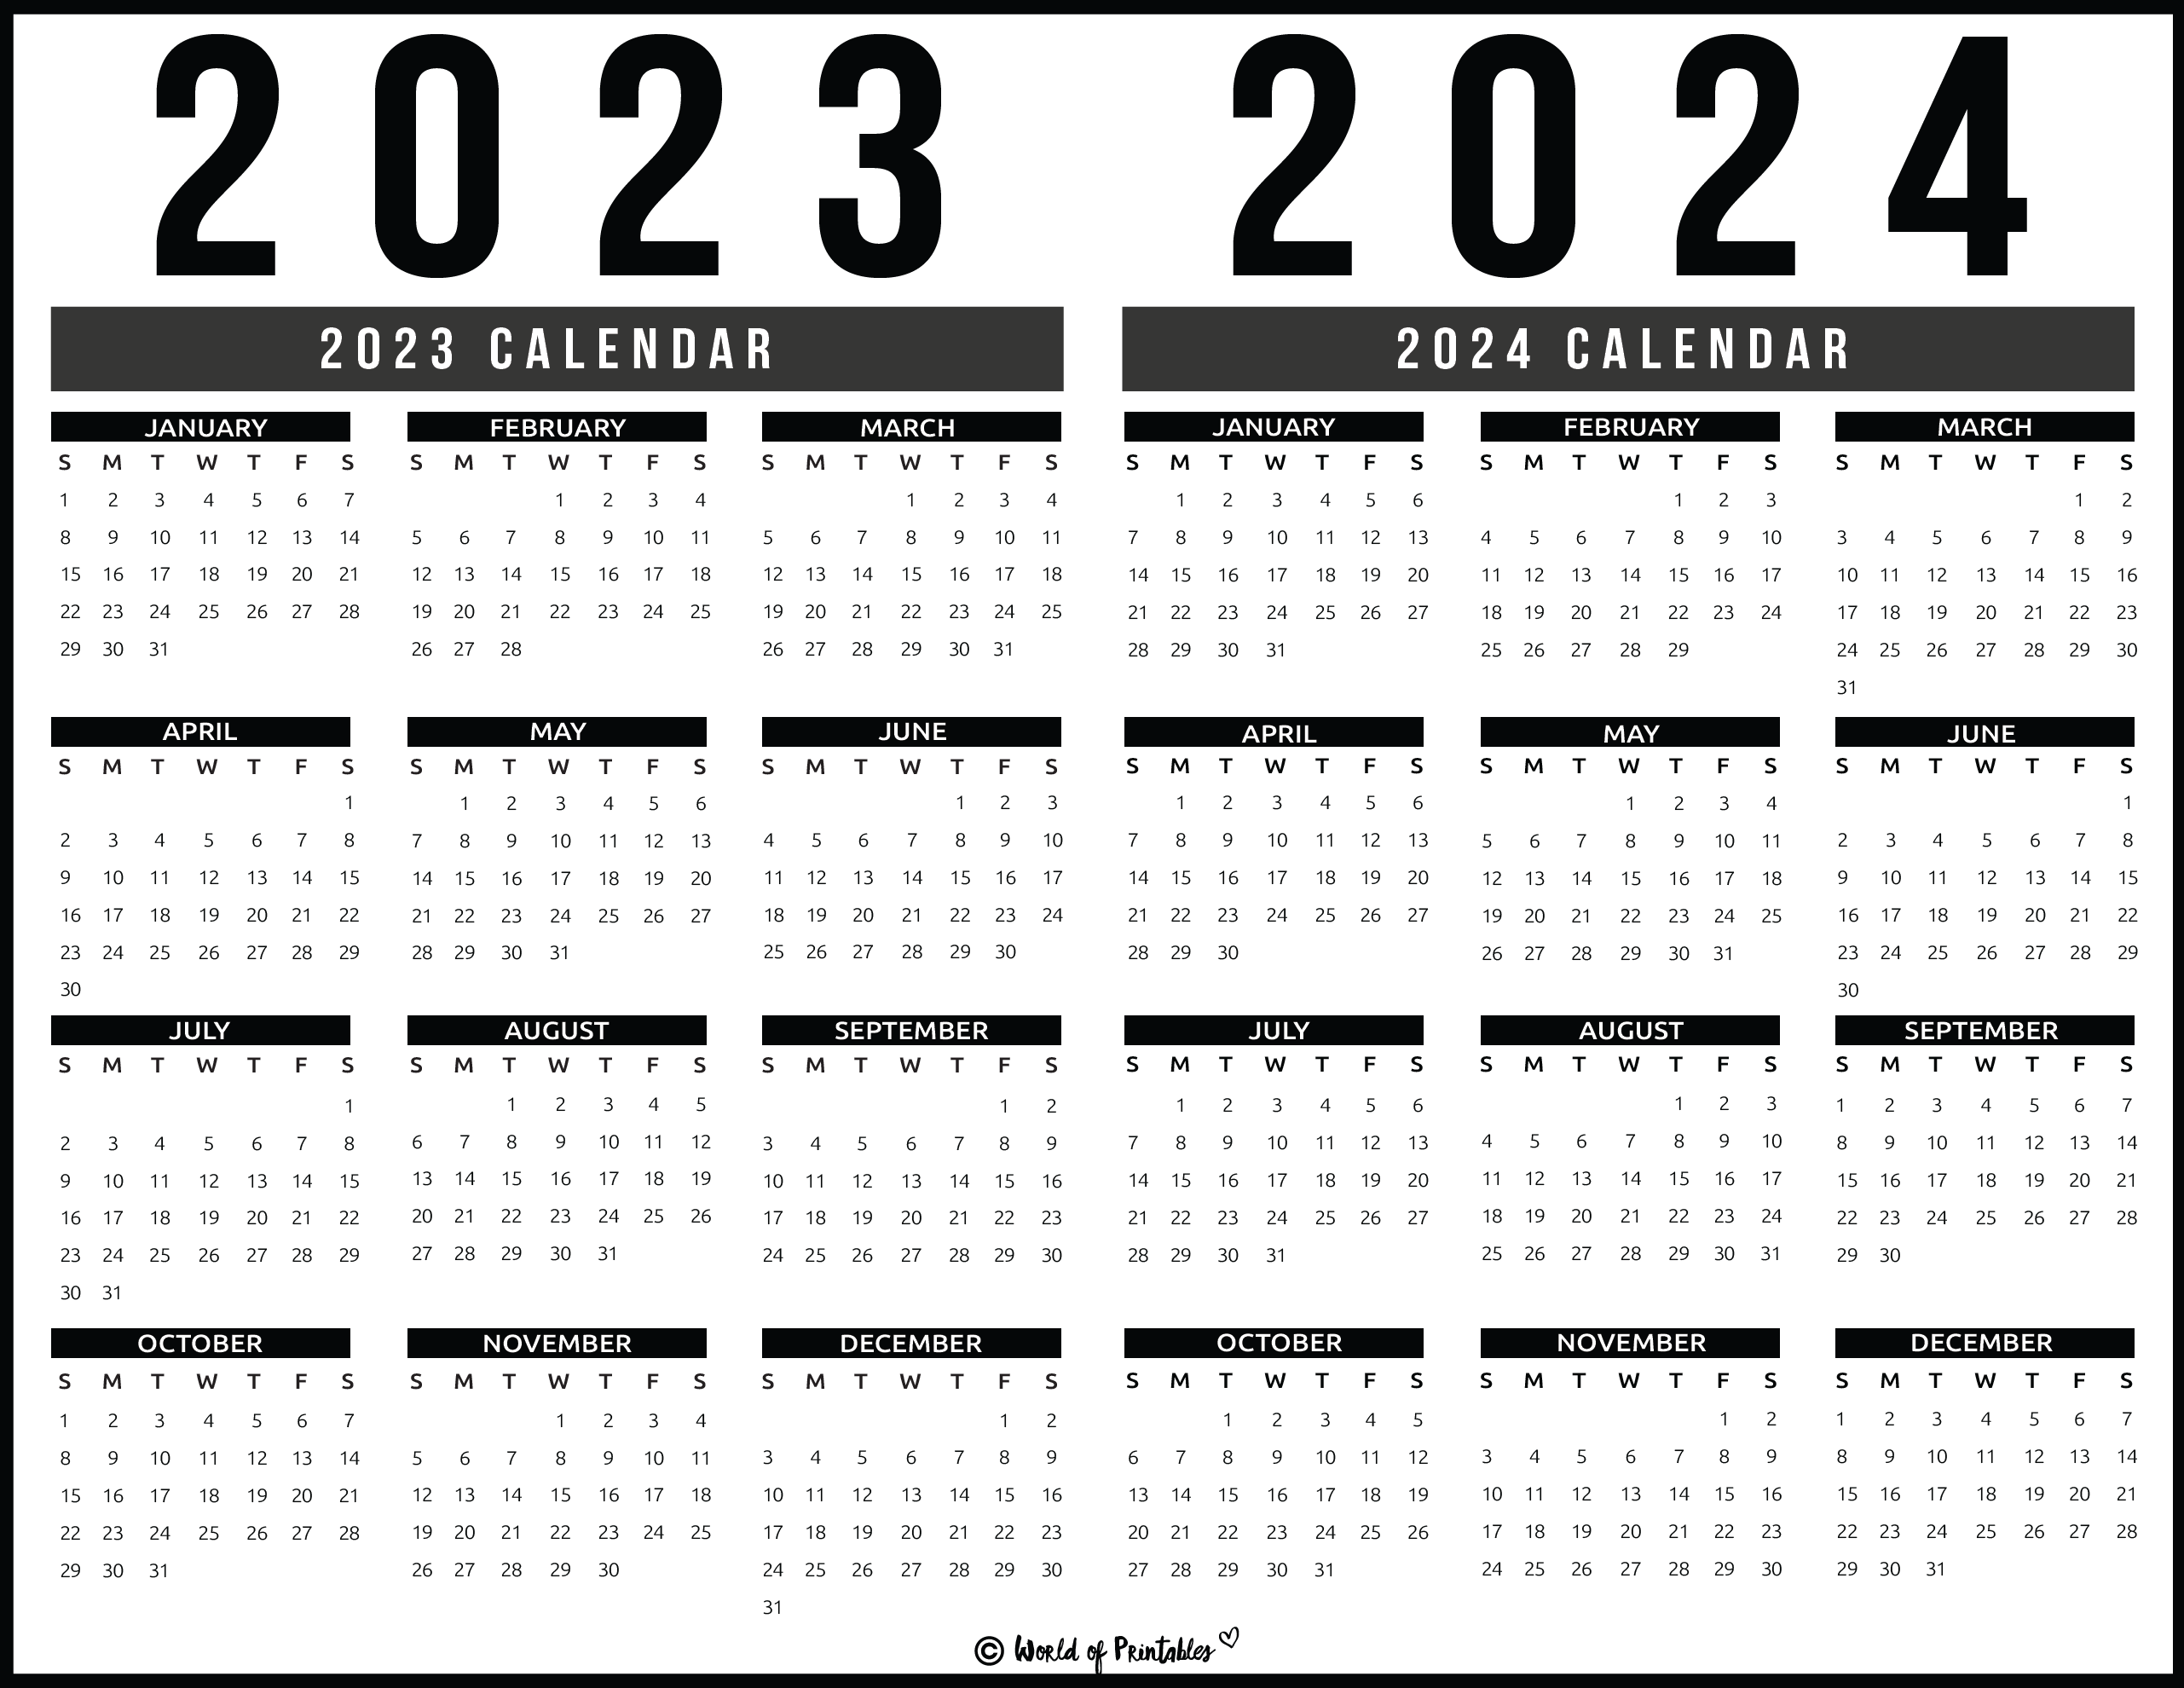 2023 2024 Calendar Free Printables - World Of Printables for 2023 2024 Printable Calendar